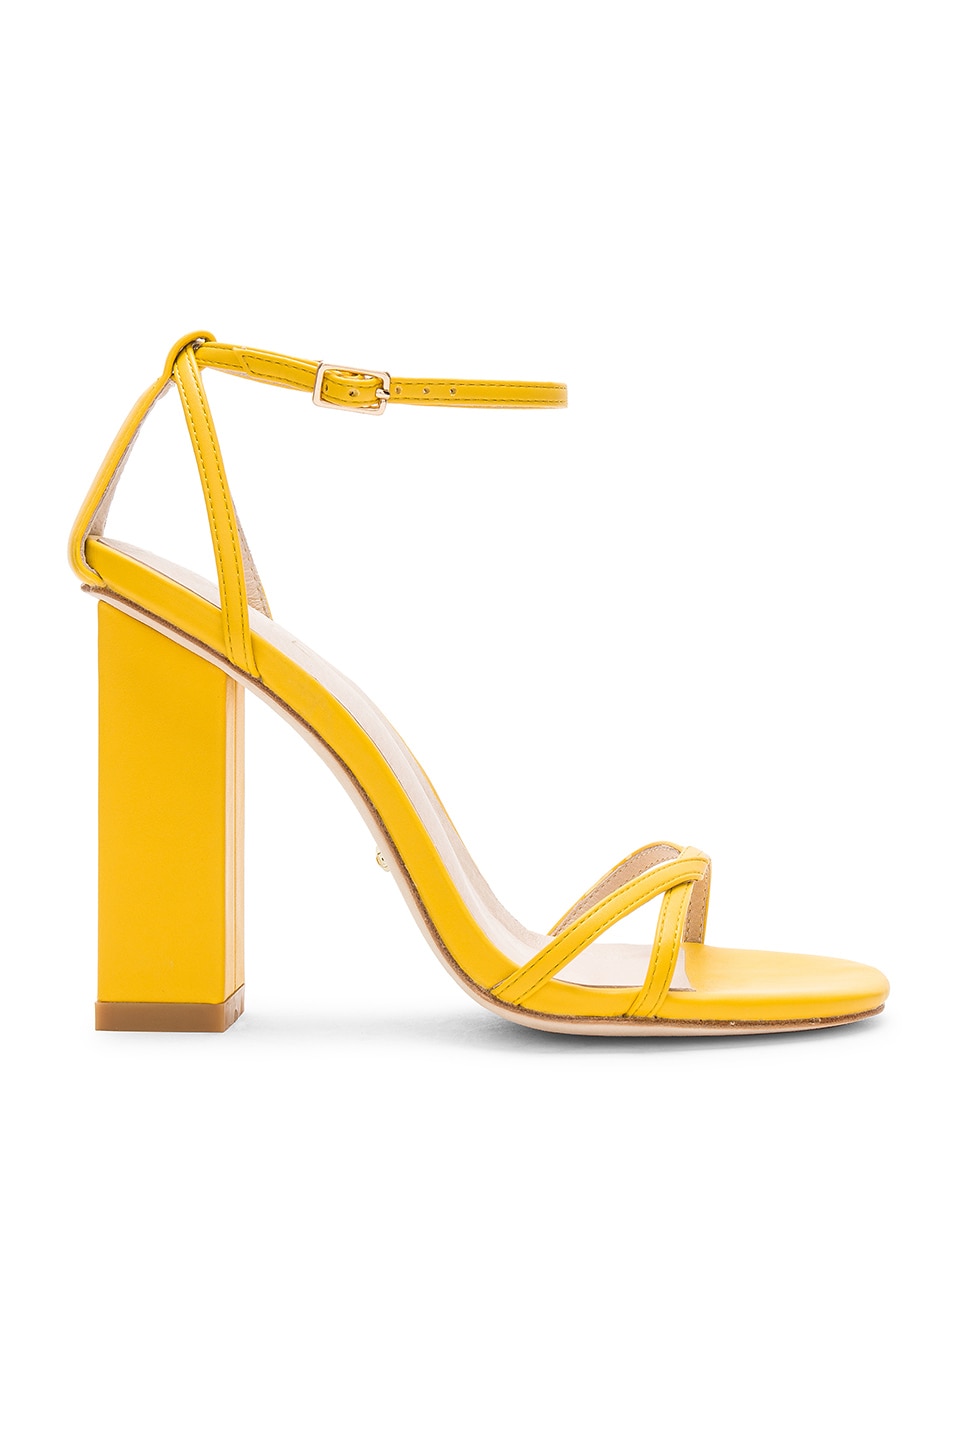 RAYE Hatty Heel in Yellow | REVOLVE